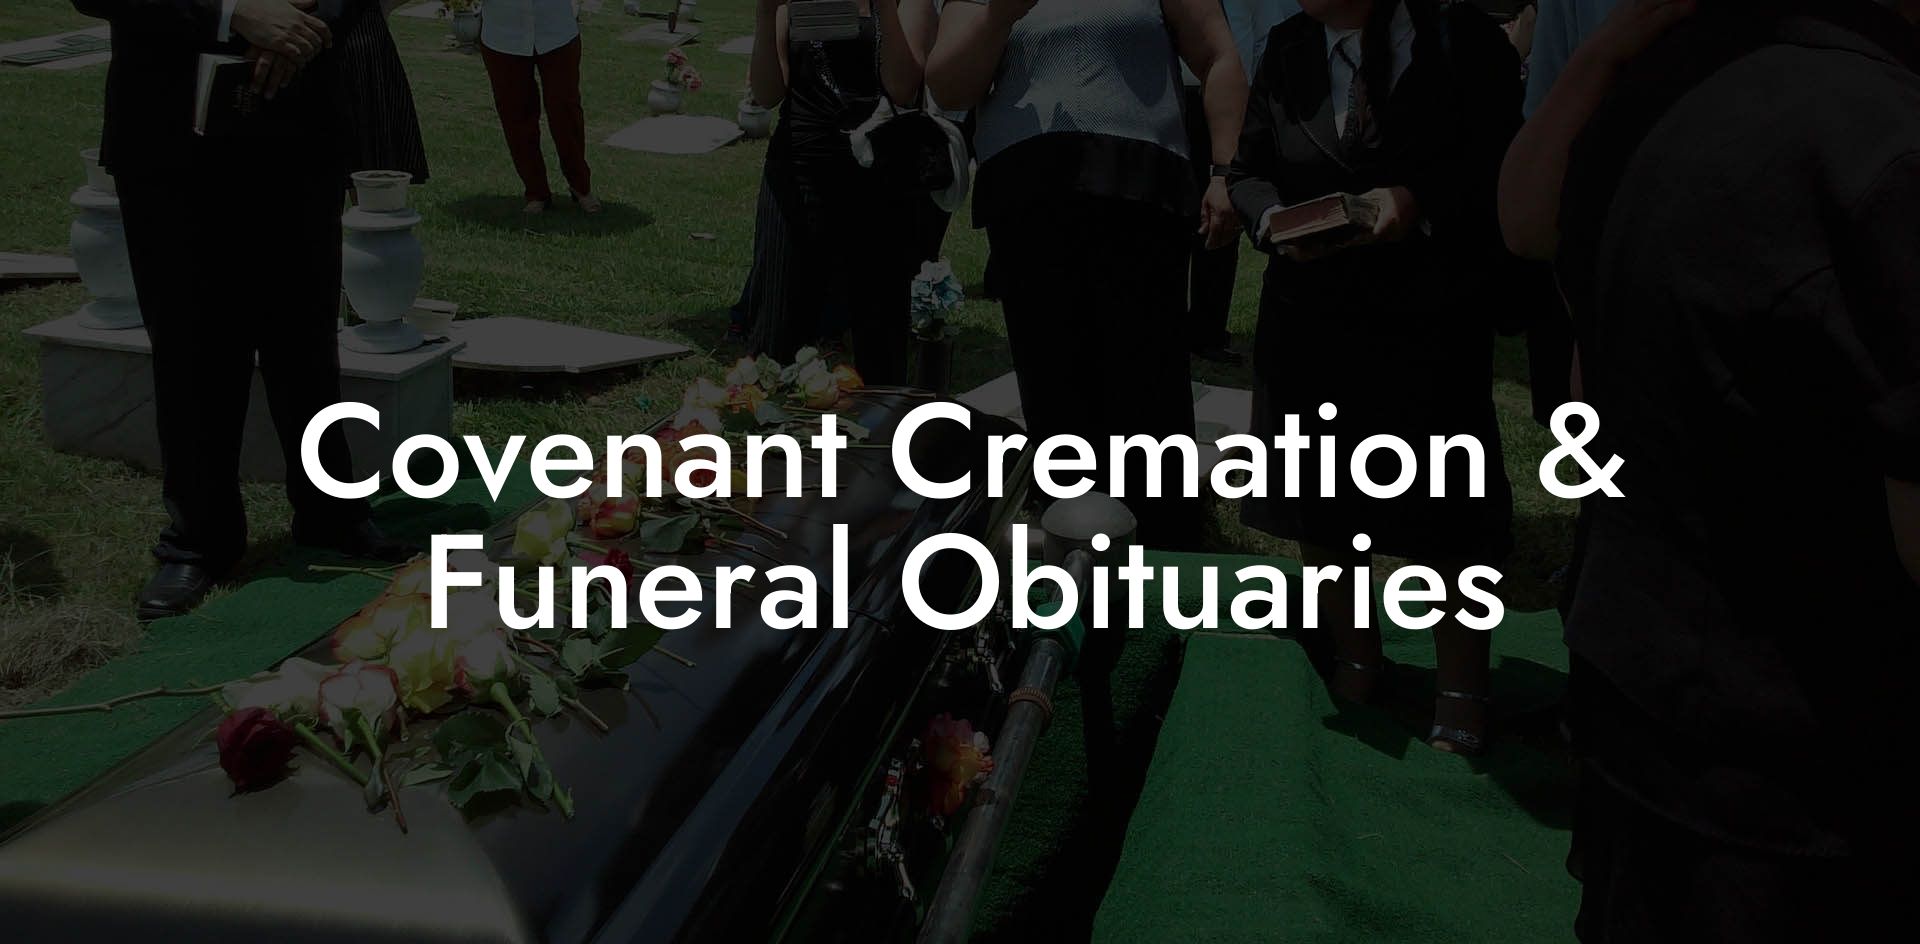 Covenant Cremation & Funeral Obituaries